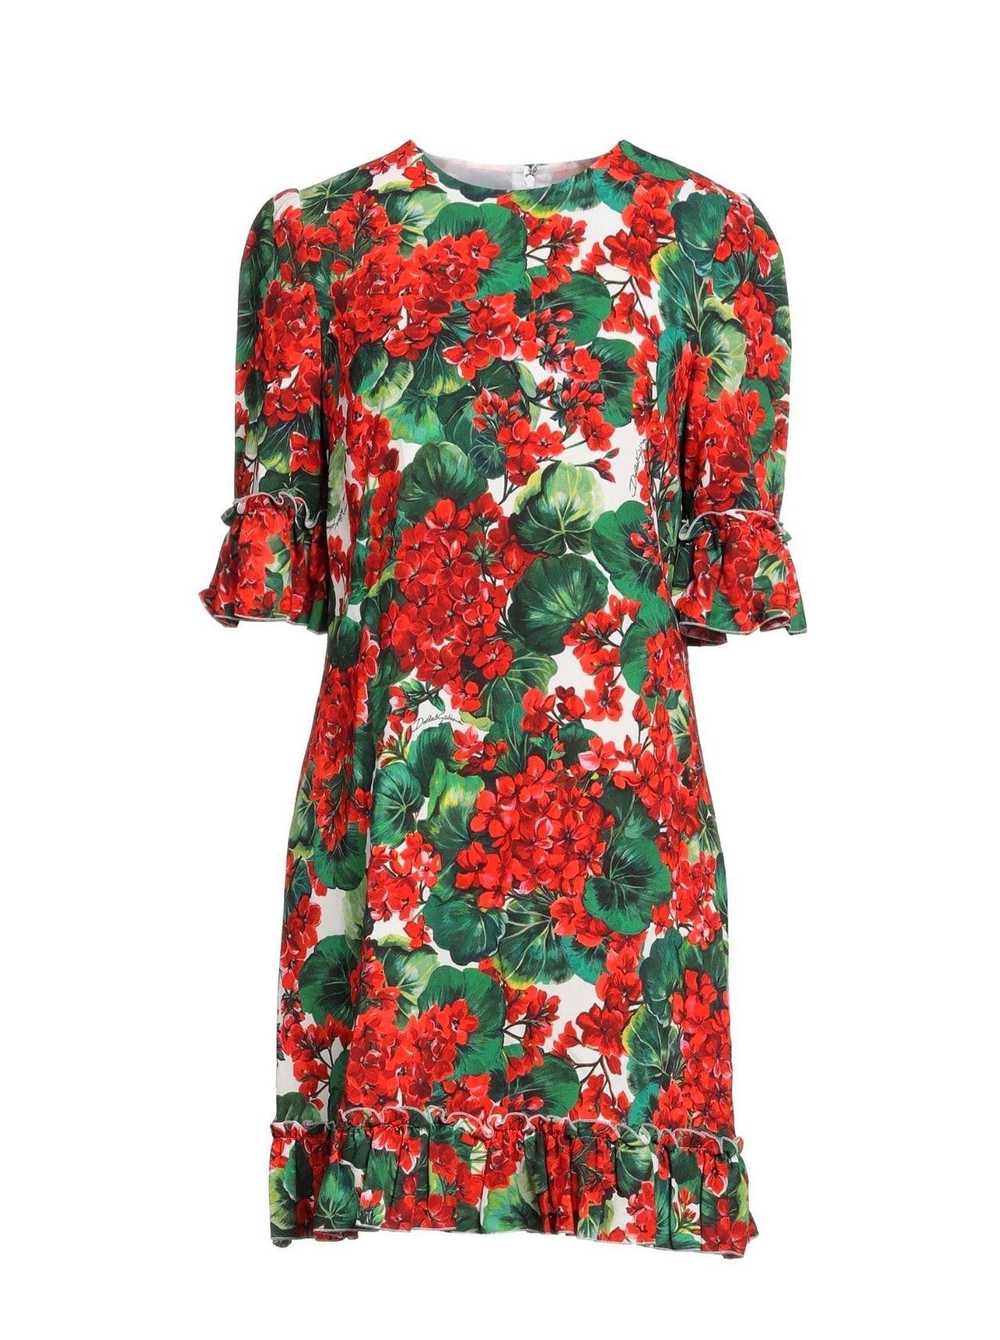 Dolce & Gabbana Geranium Print Dress - image 1